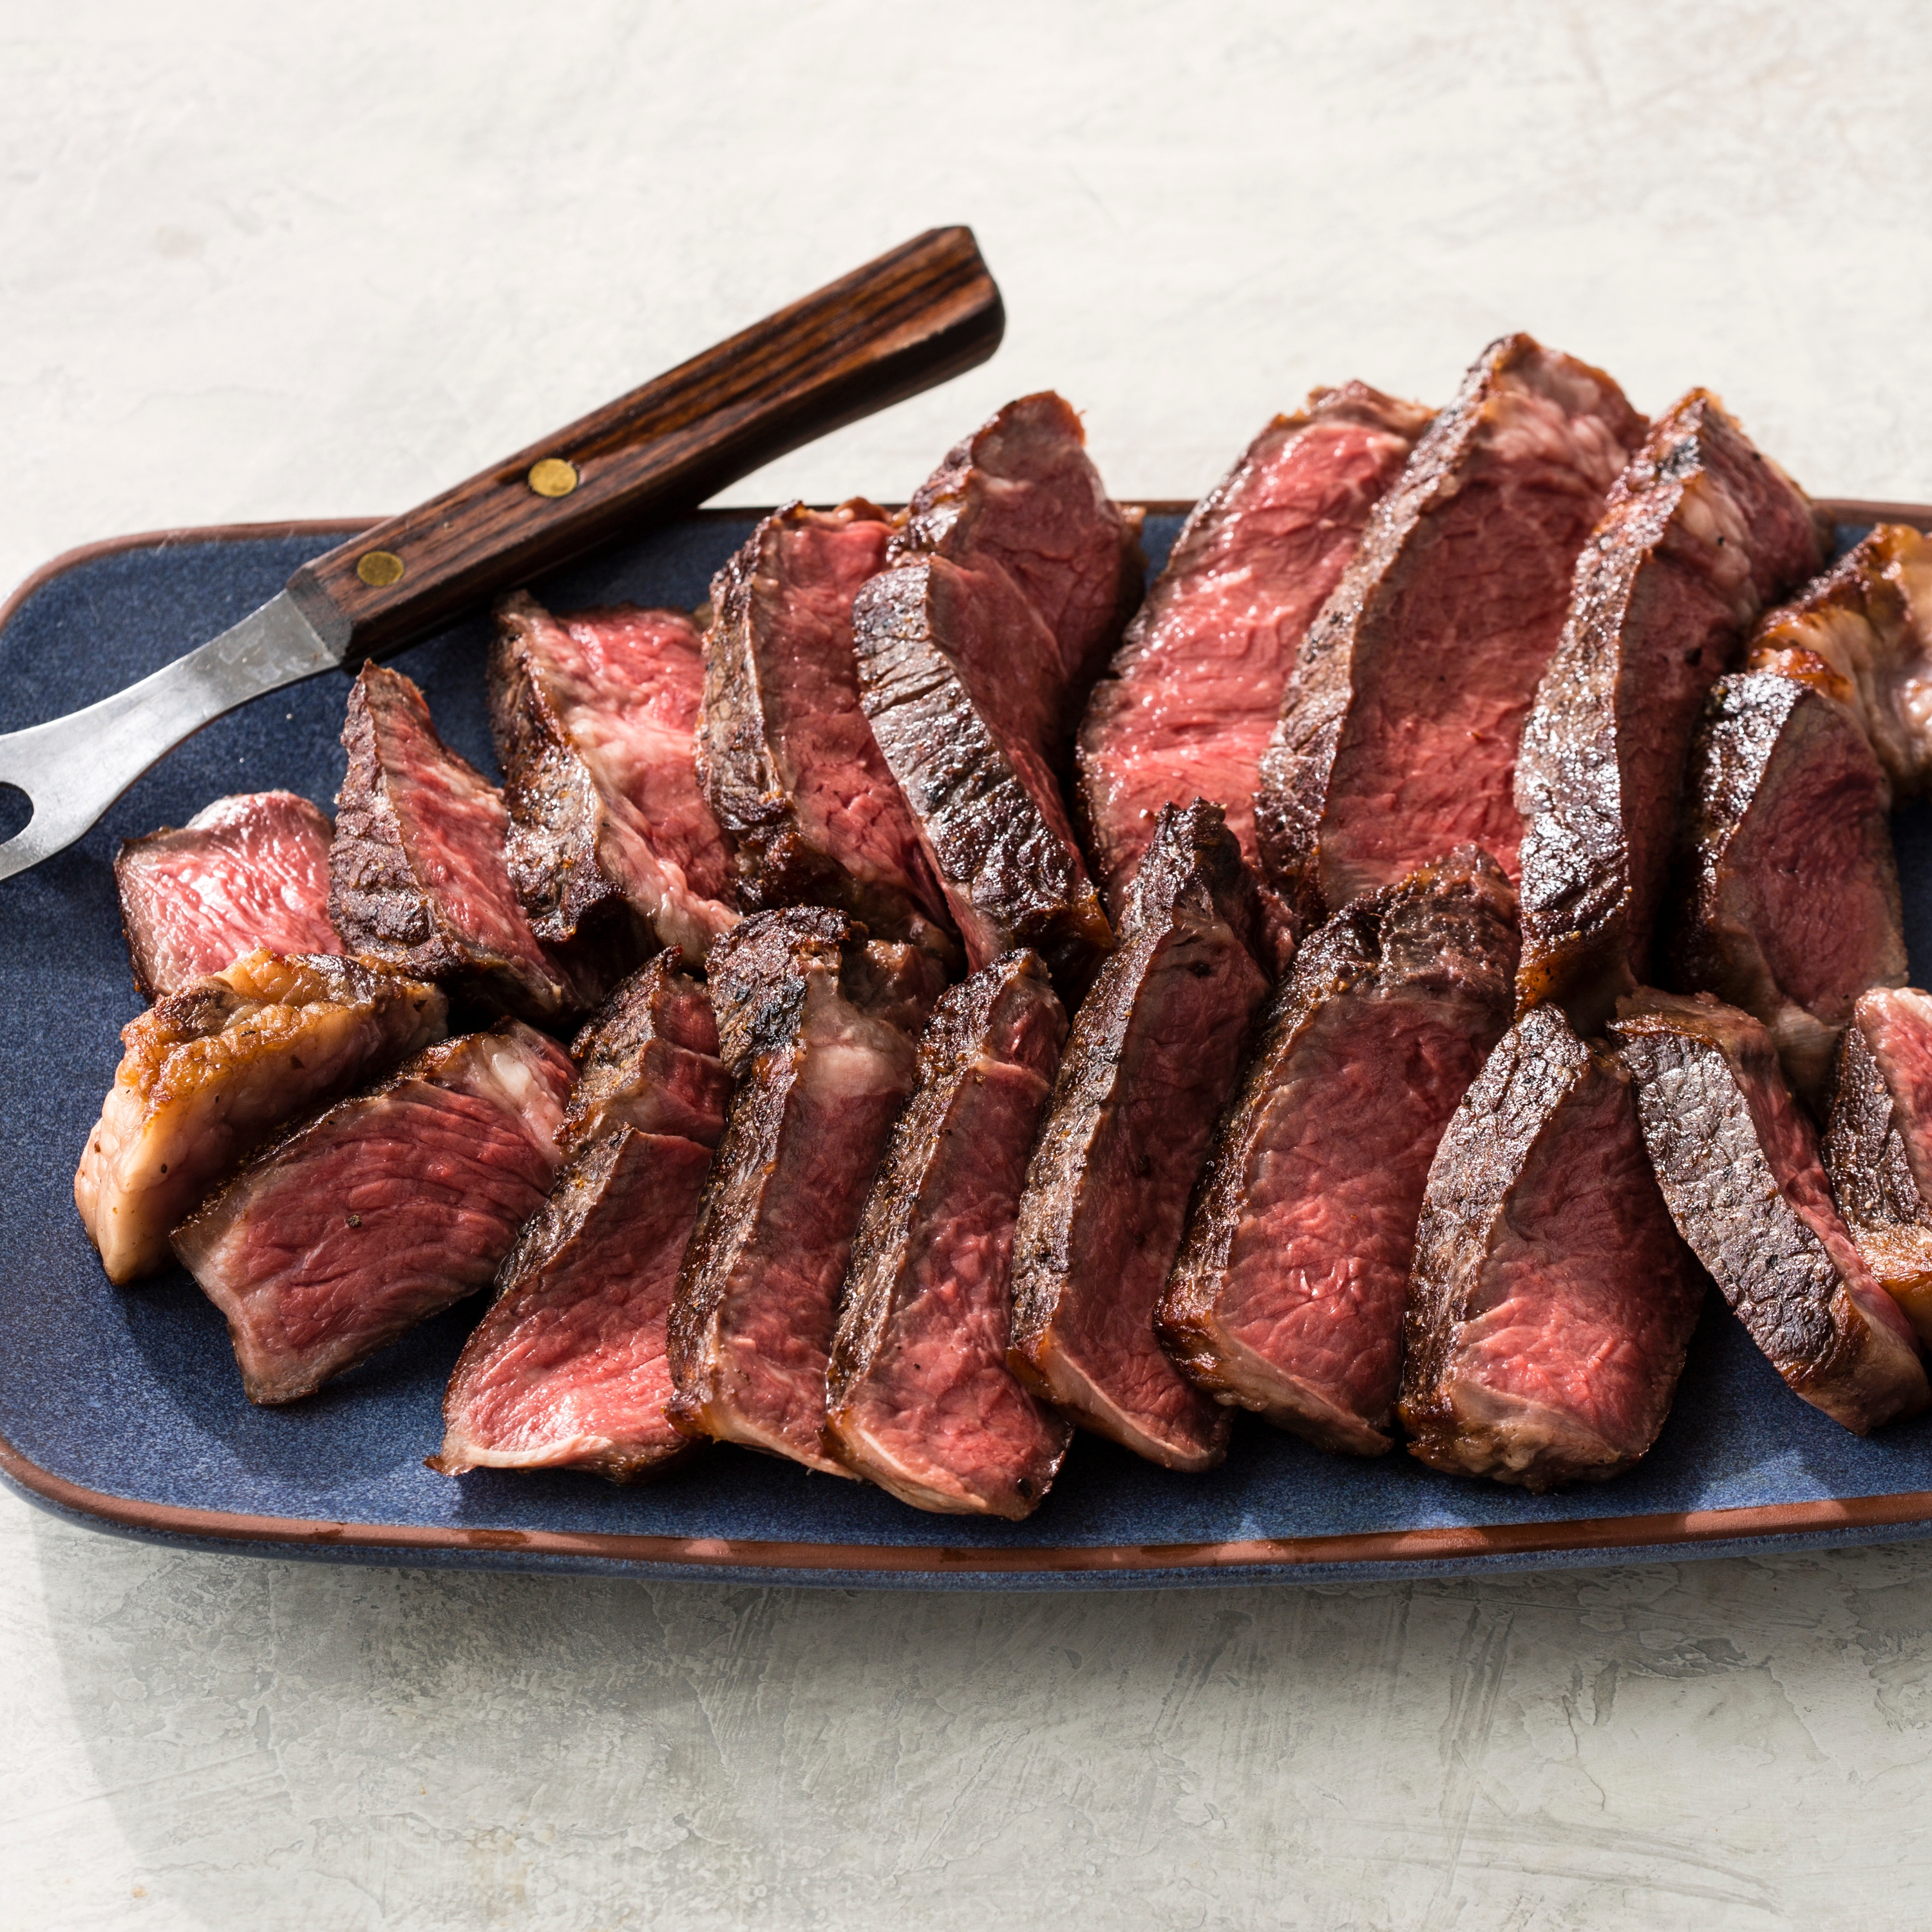 Vide Seared Steaks | America's Test Kitchen Recipe